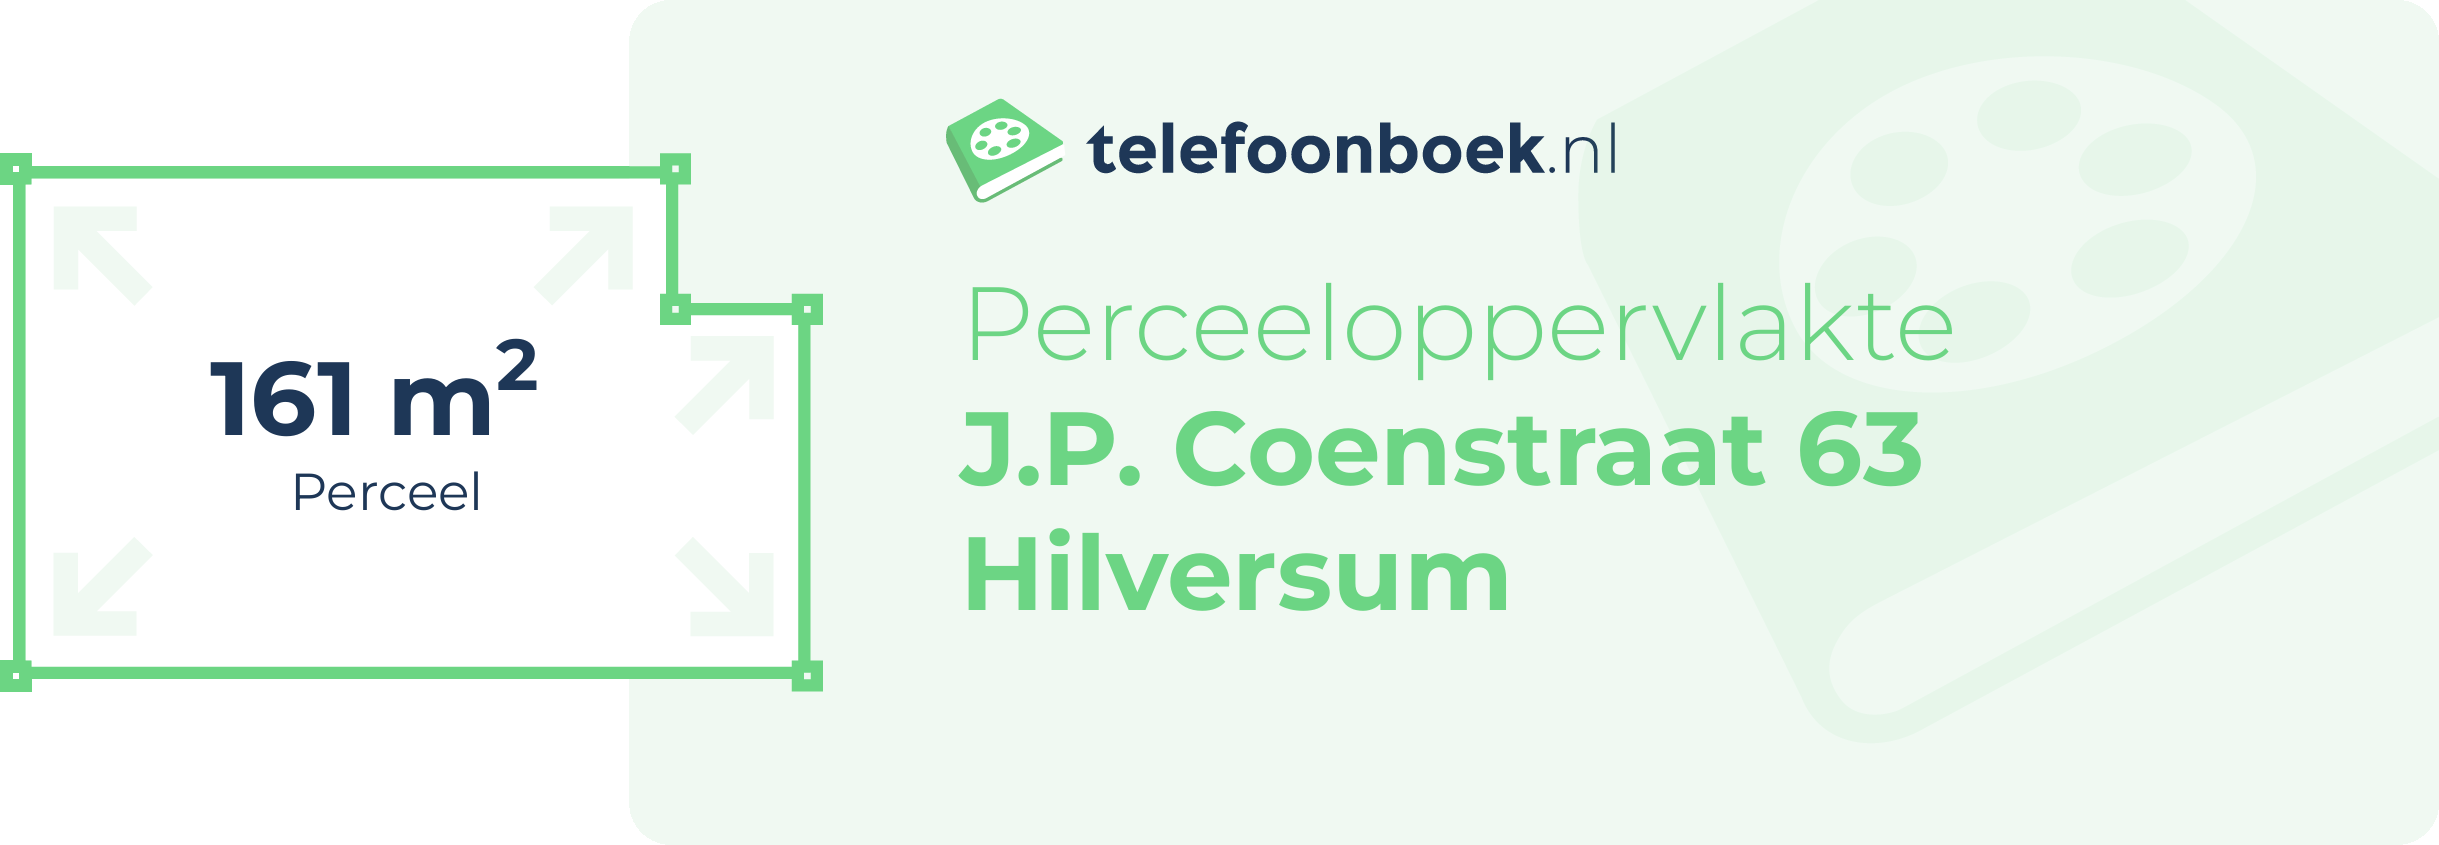 Perceeloppervlakte J.P. Coenstraat 63 Hilversum